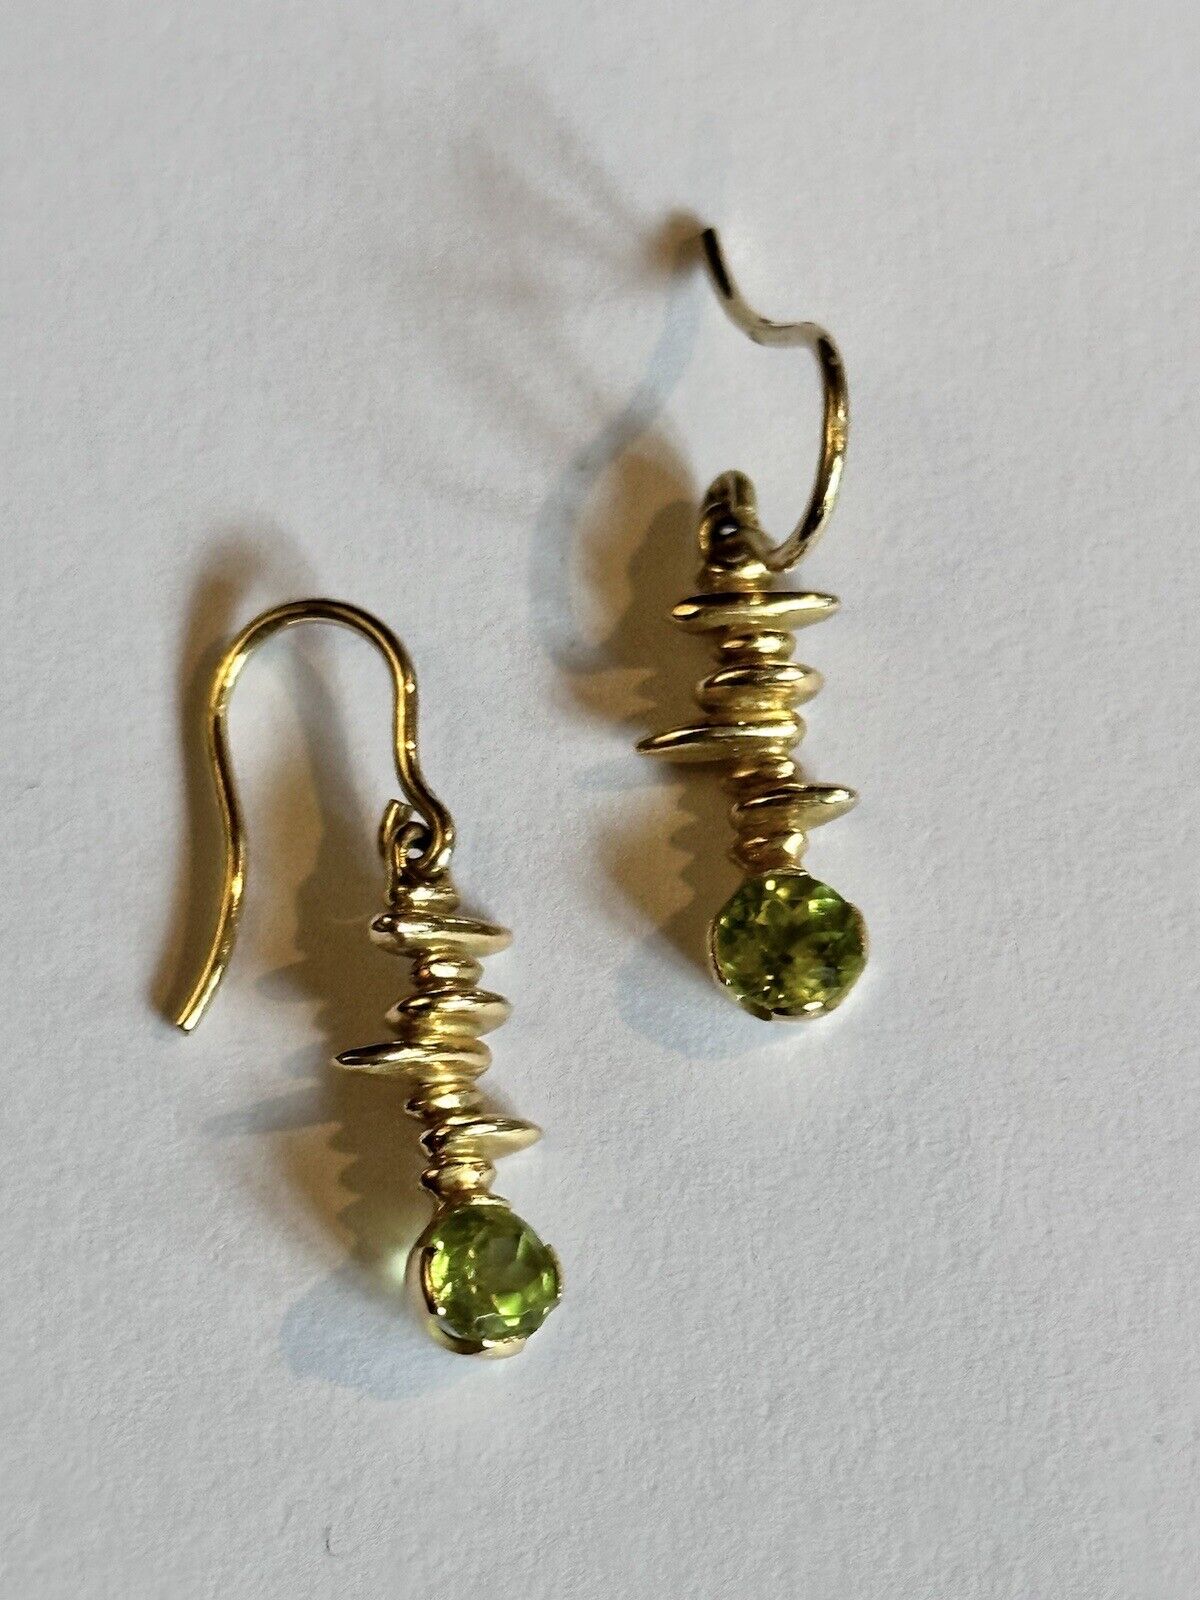 Vintage 14ct Gold Peridot Drop Earrings